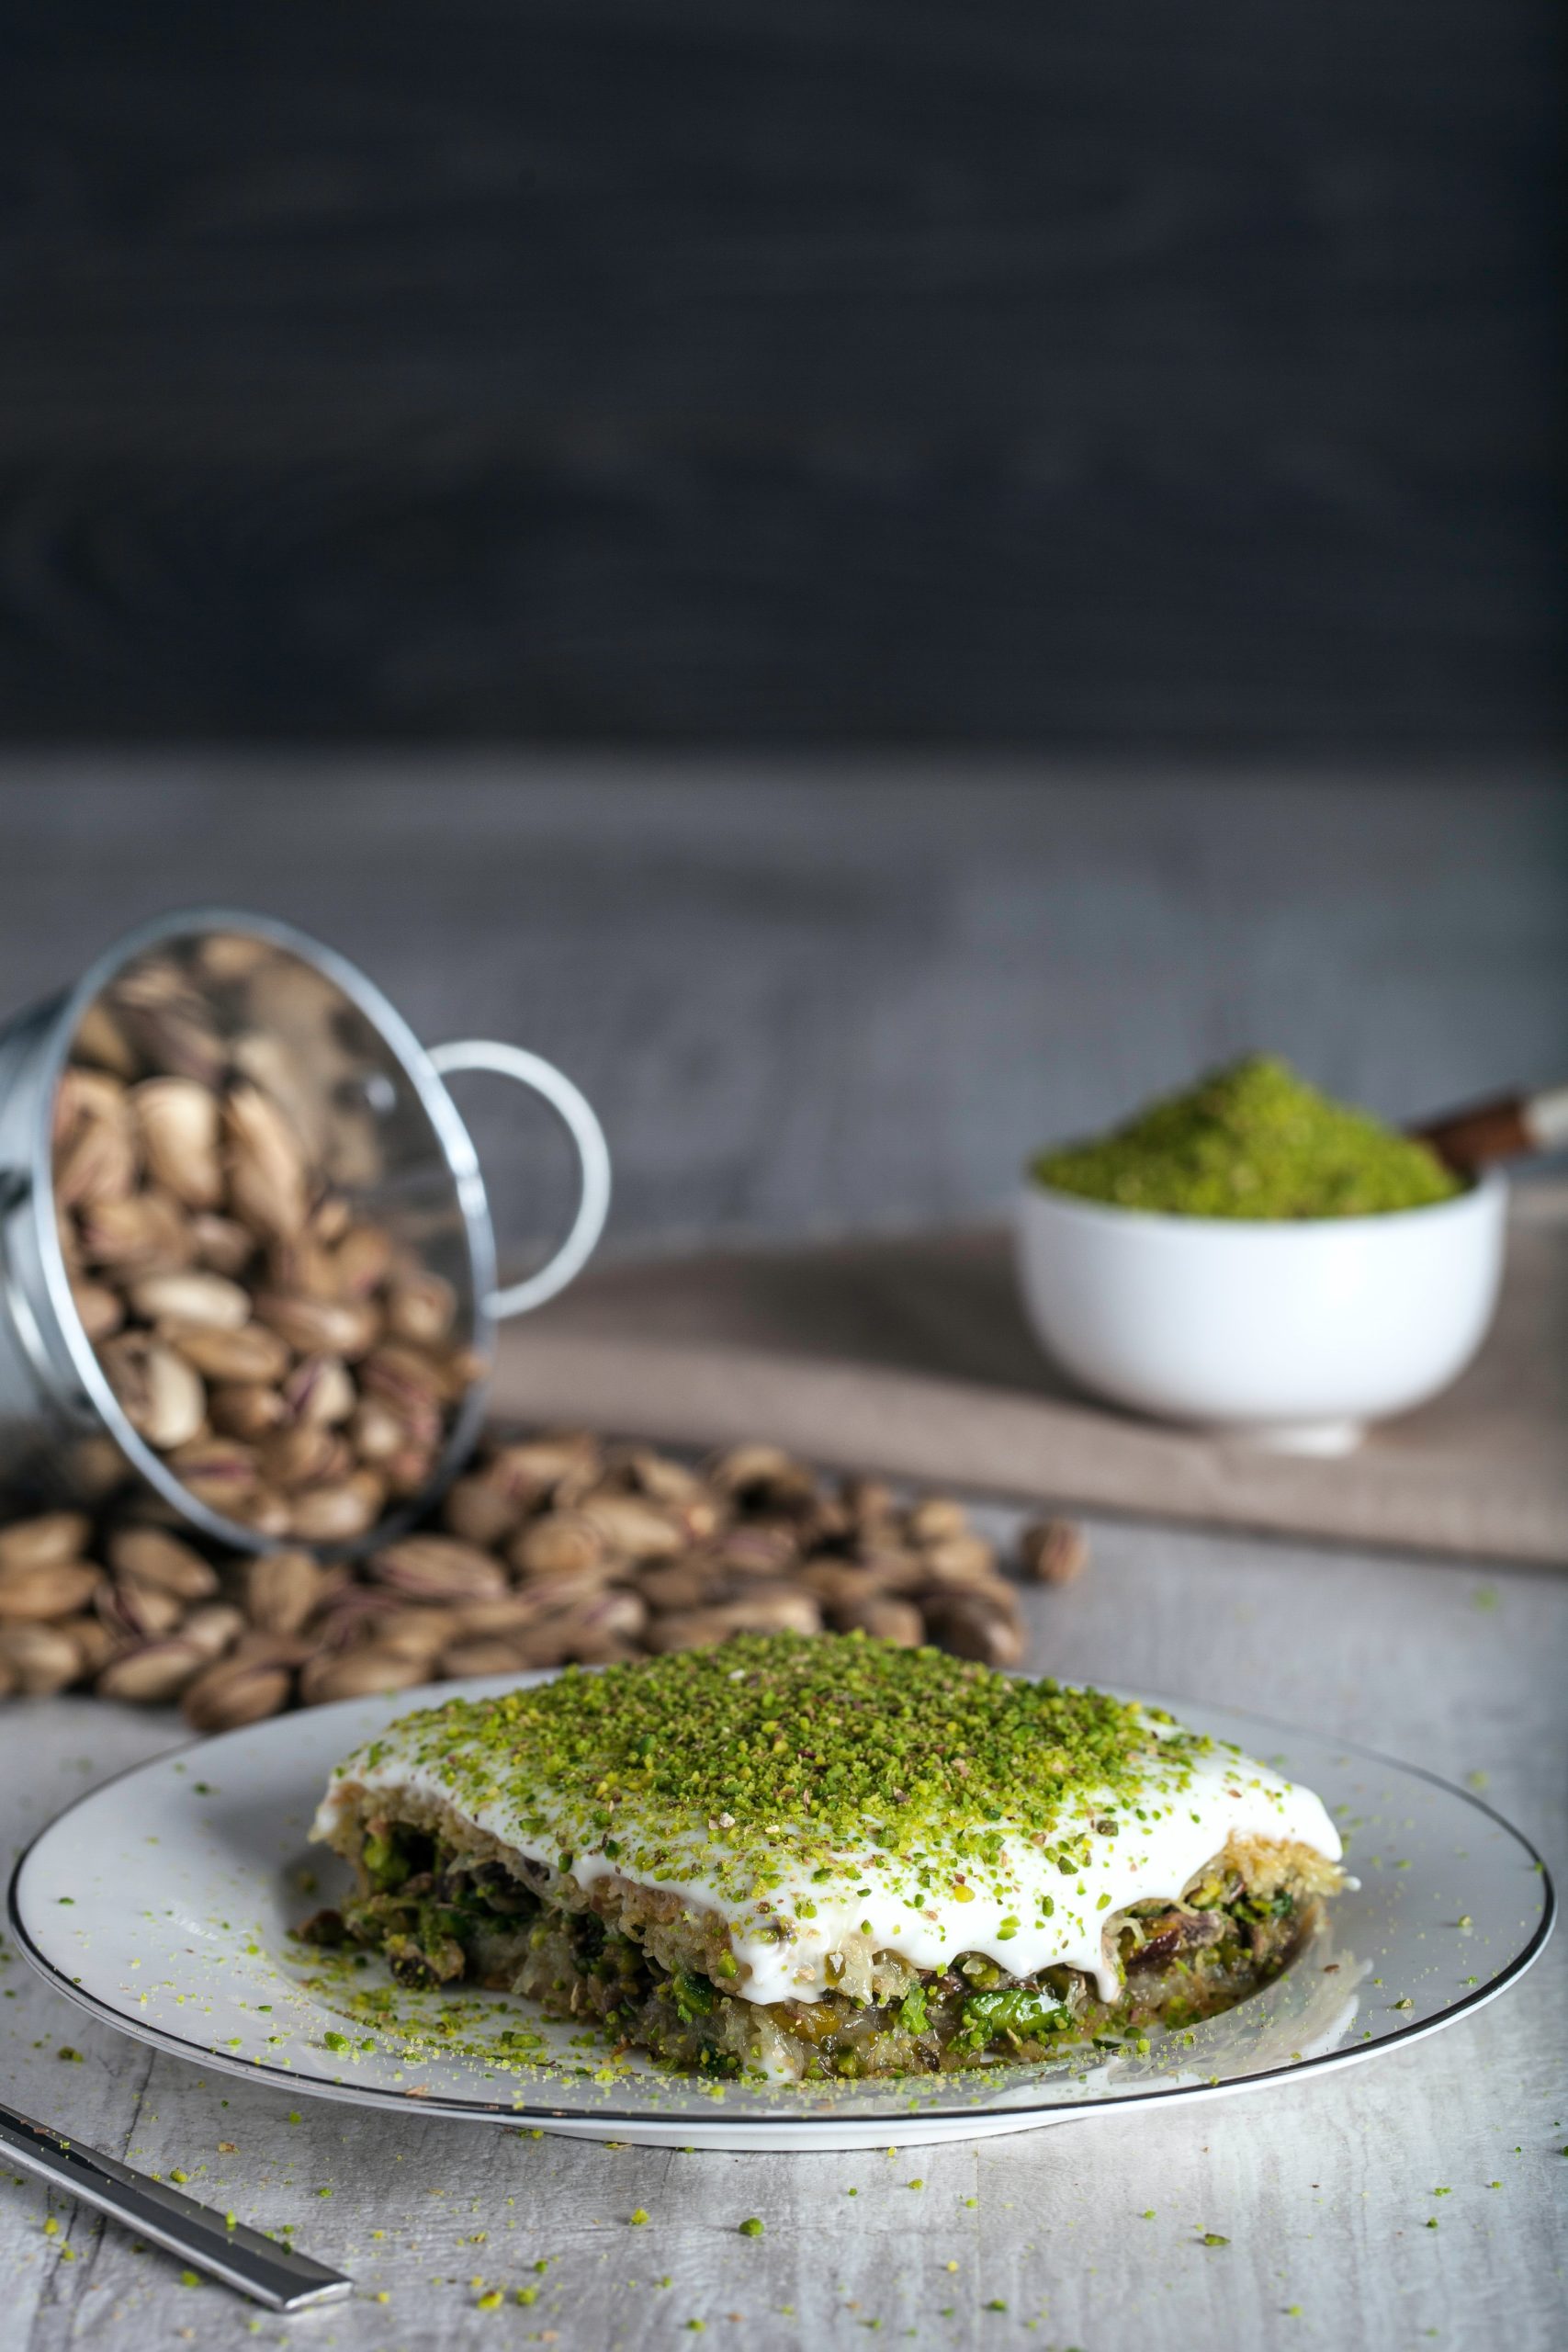 turkish dessert kadayif with pistachio